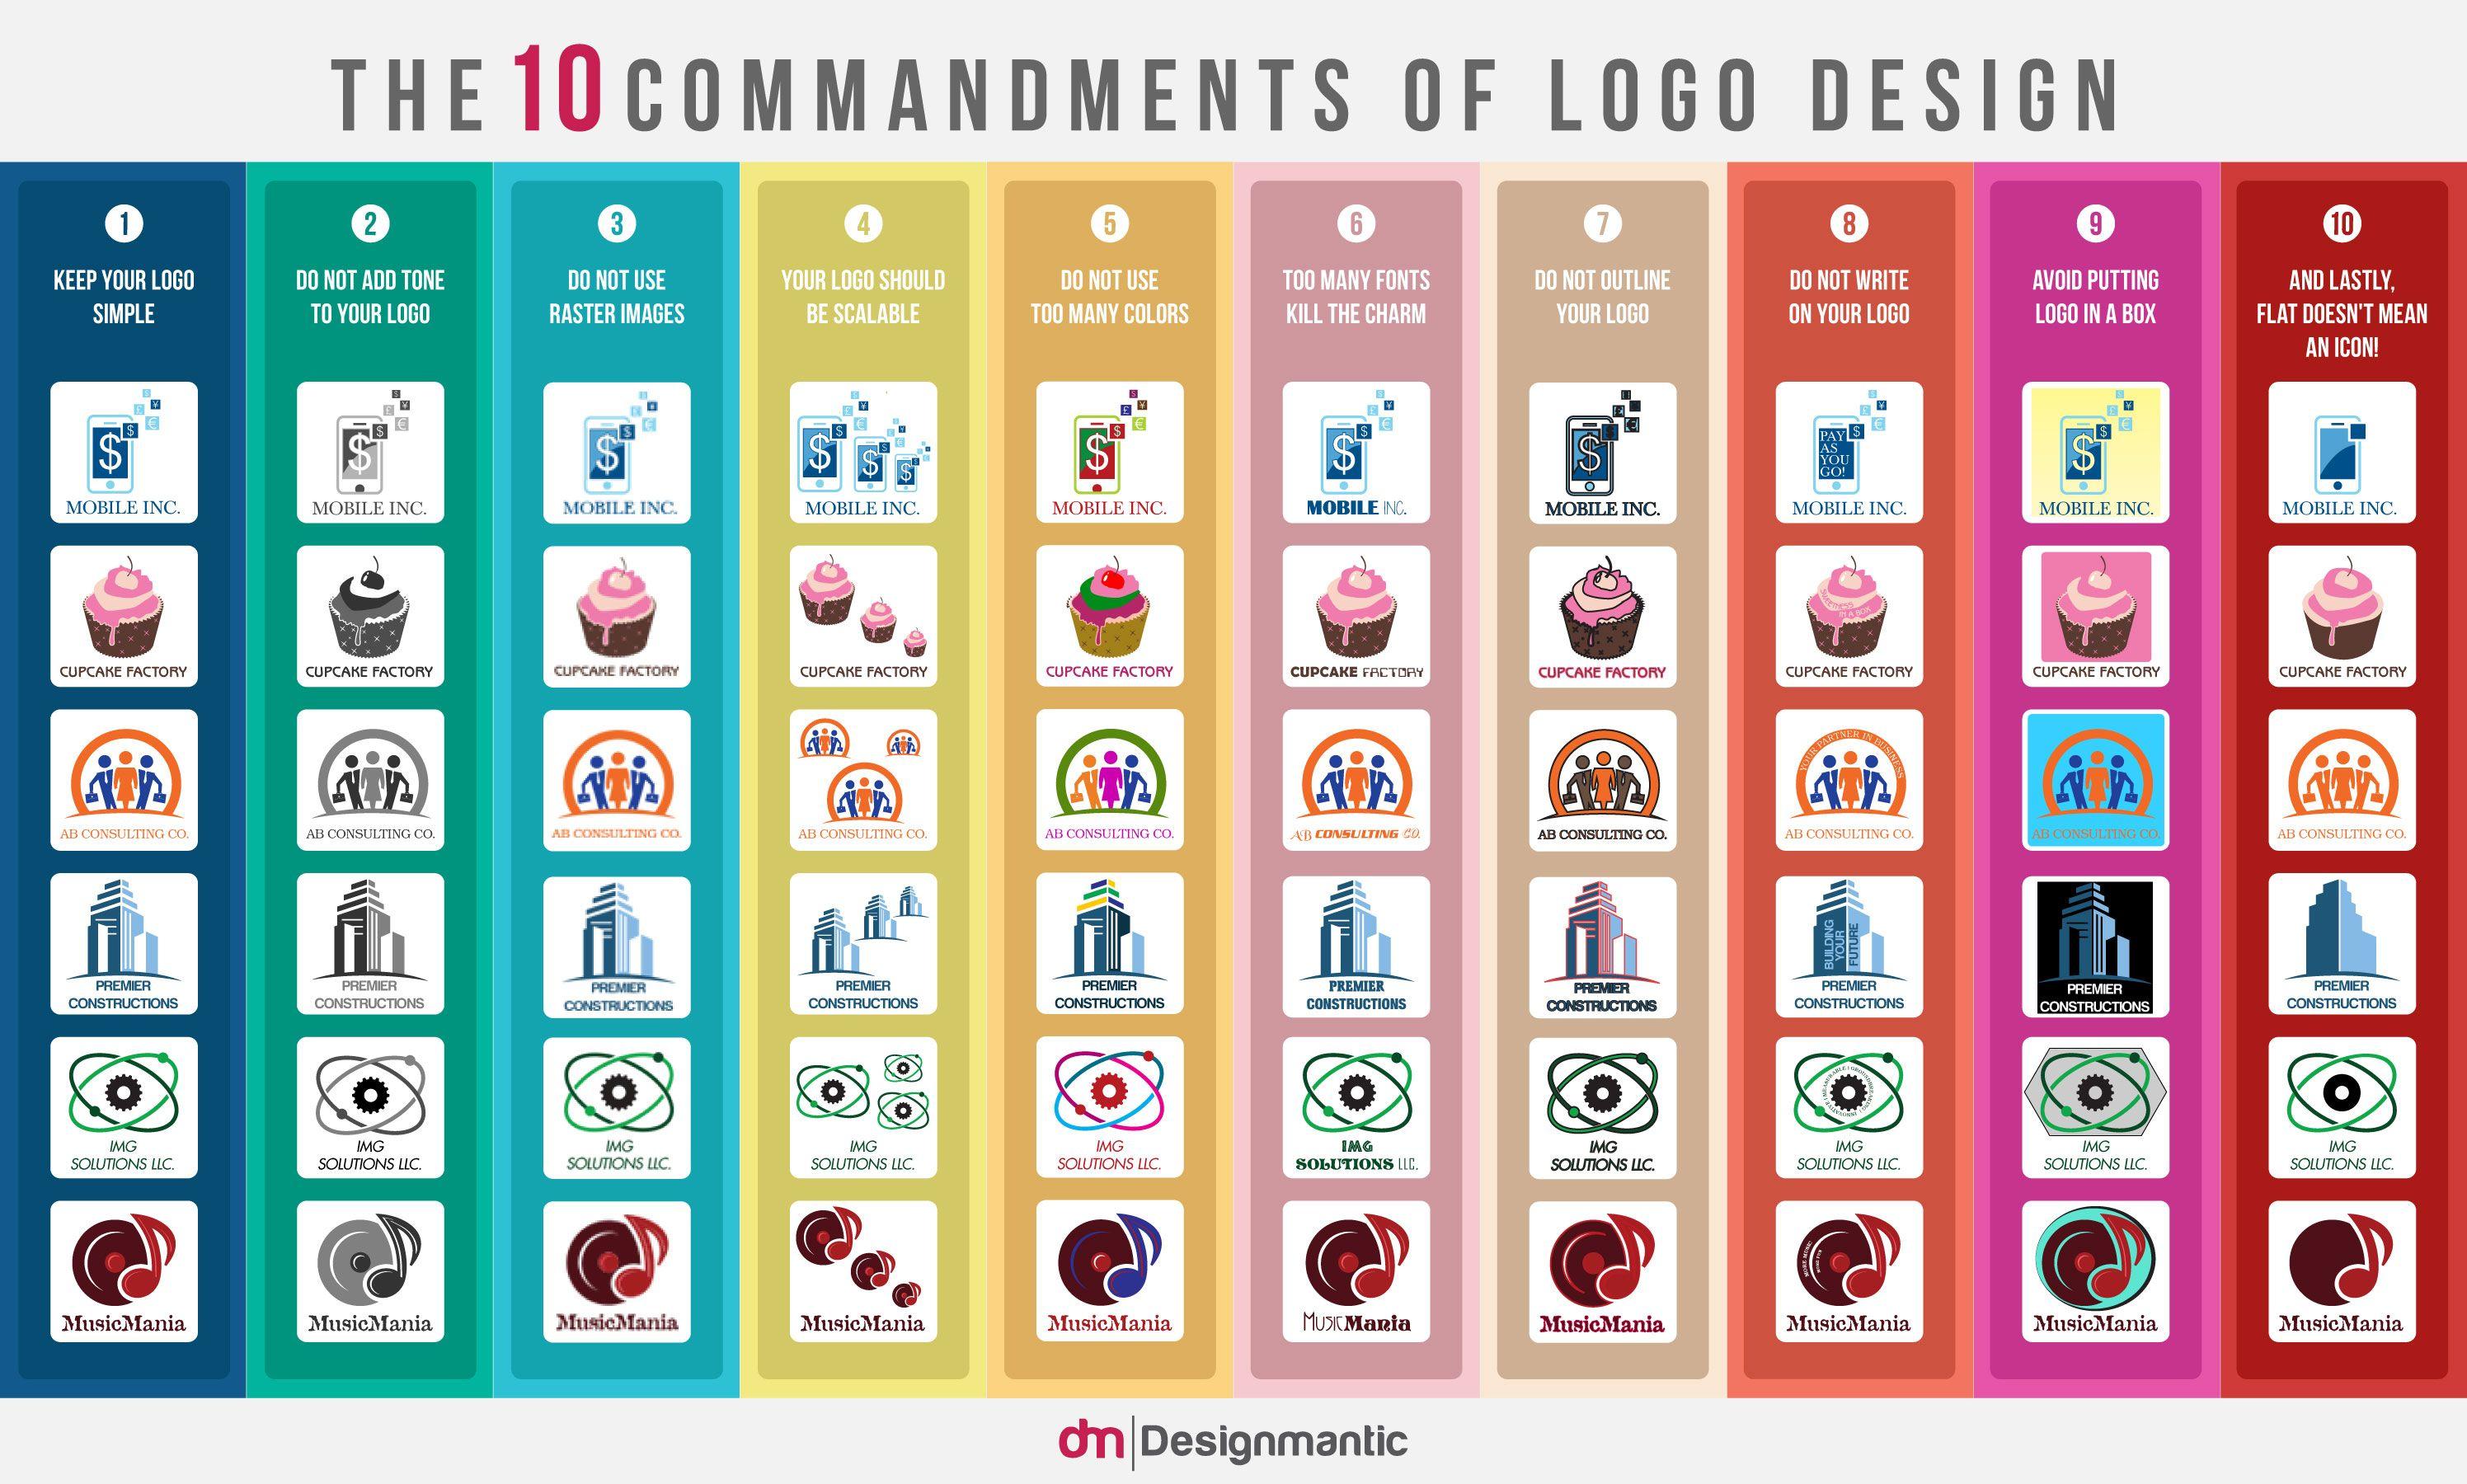 Designa Logo - Infographic that shows the 10 commandments of logo design. Creative